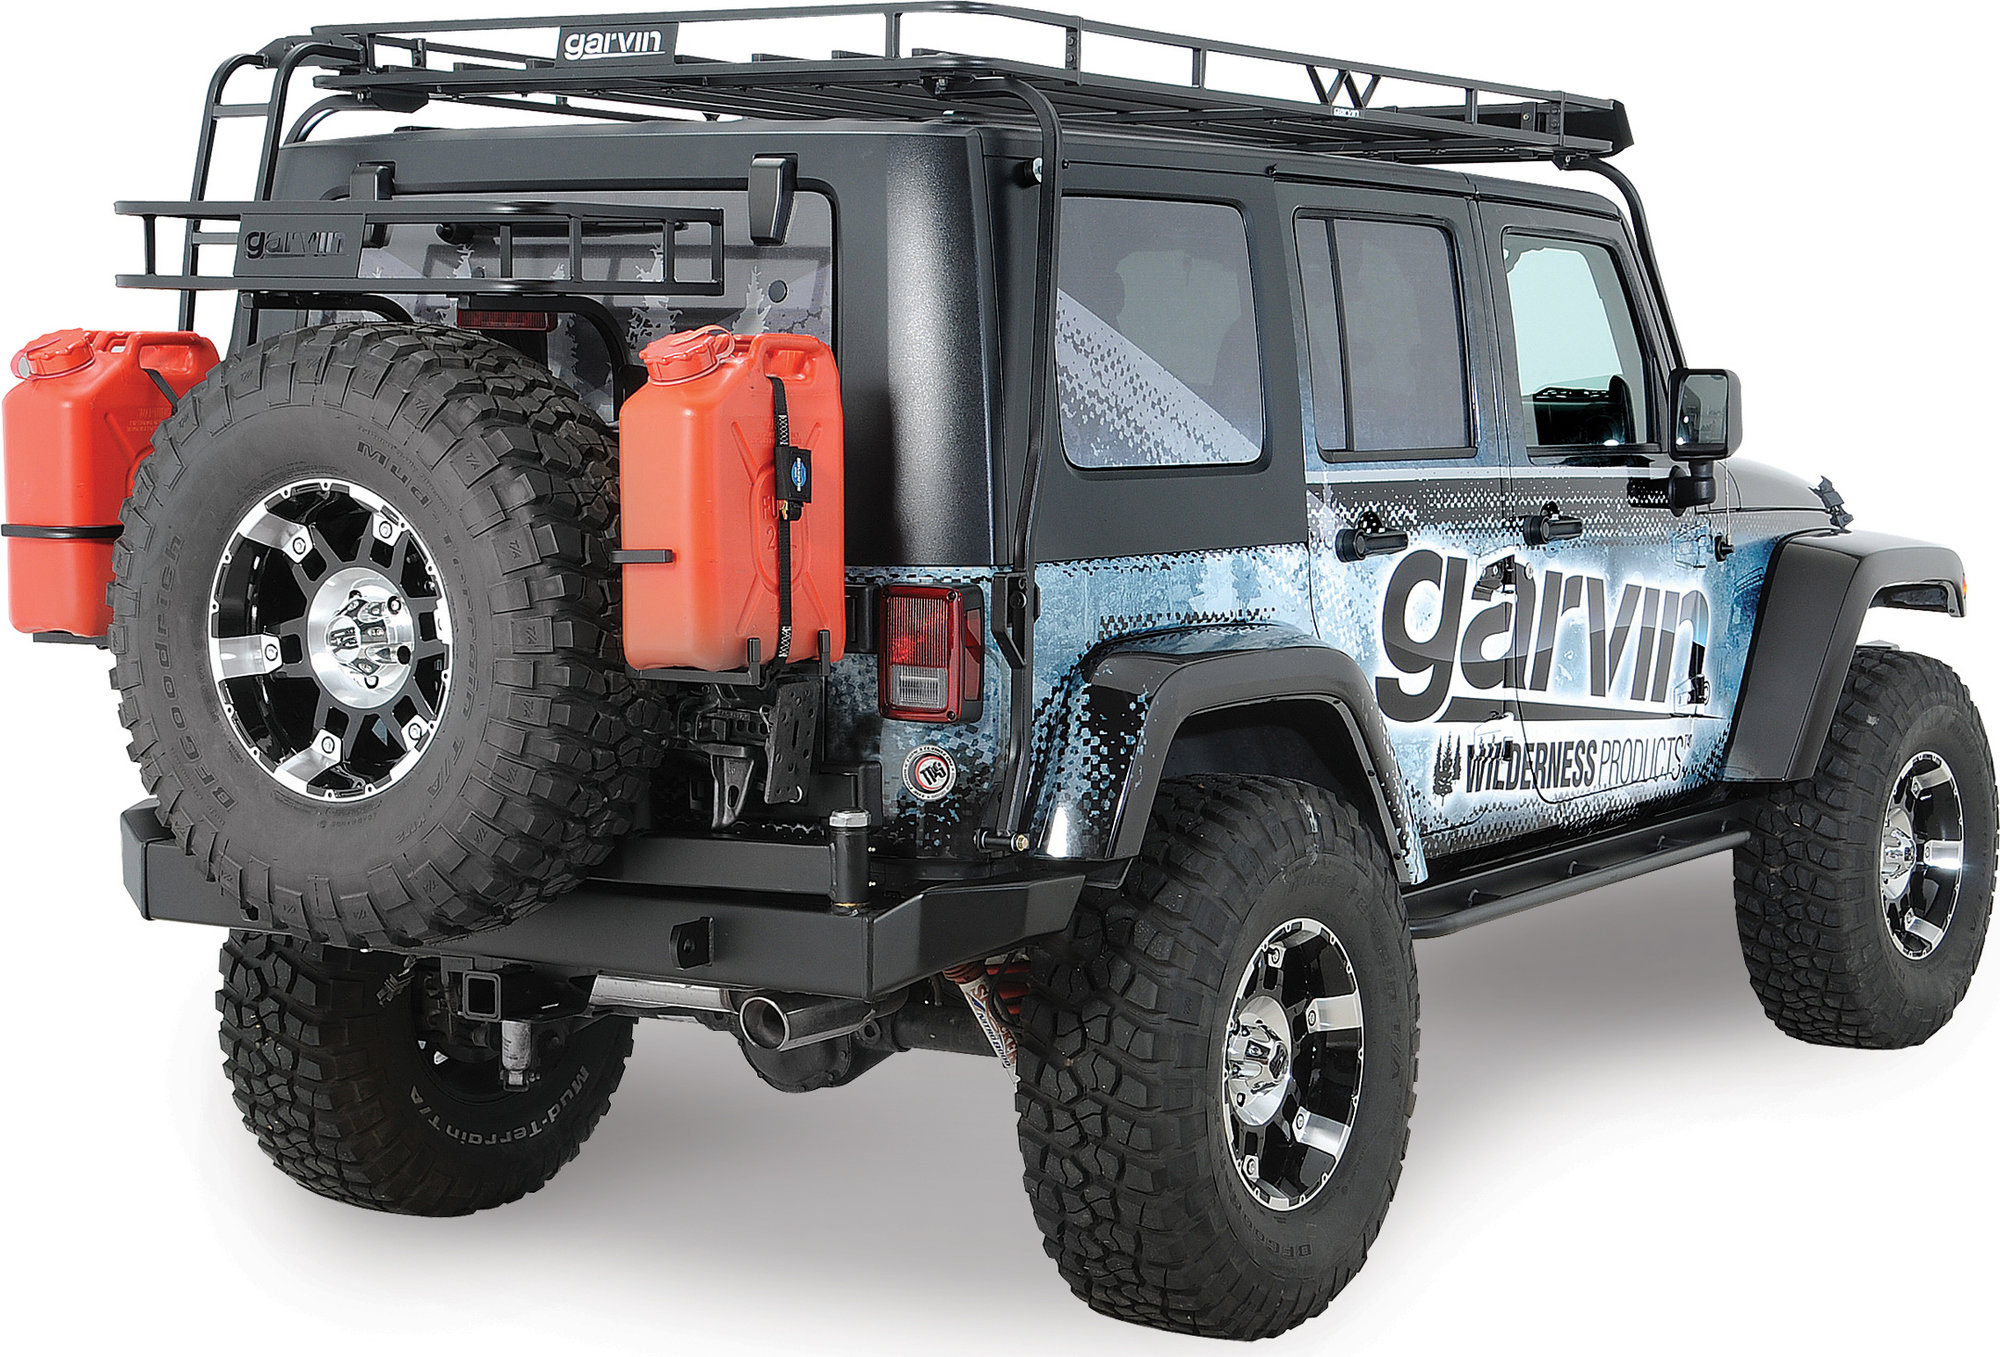 Garvin 66706 Passenger Side Jerry Can Holder for 07-18 Jeep Wrangler JK  with Garvin G2 Swing Away | Quadratec